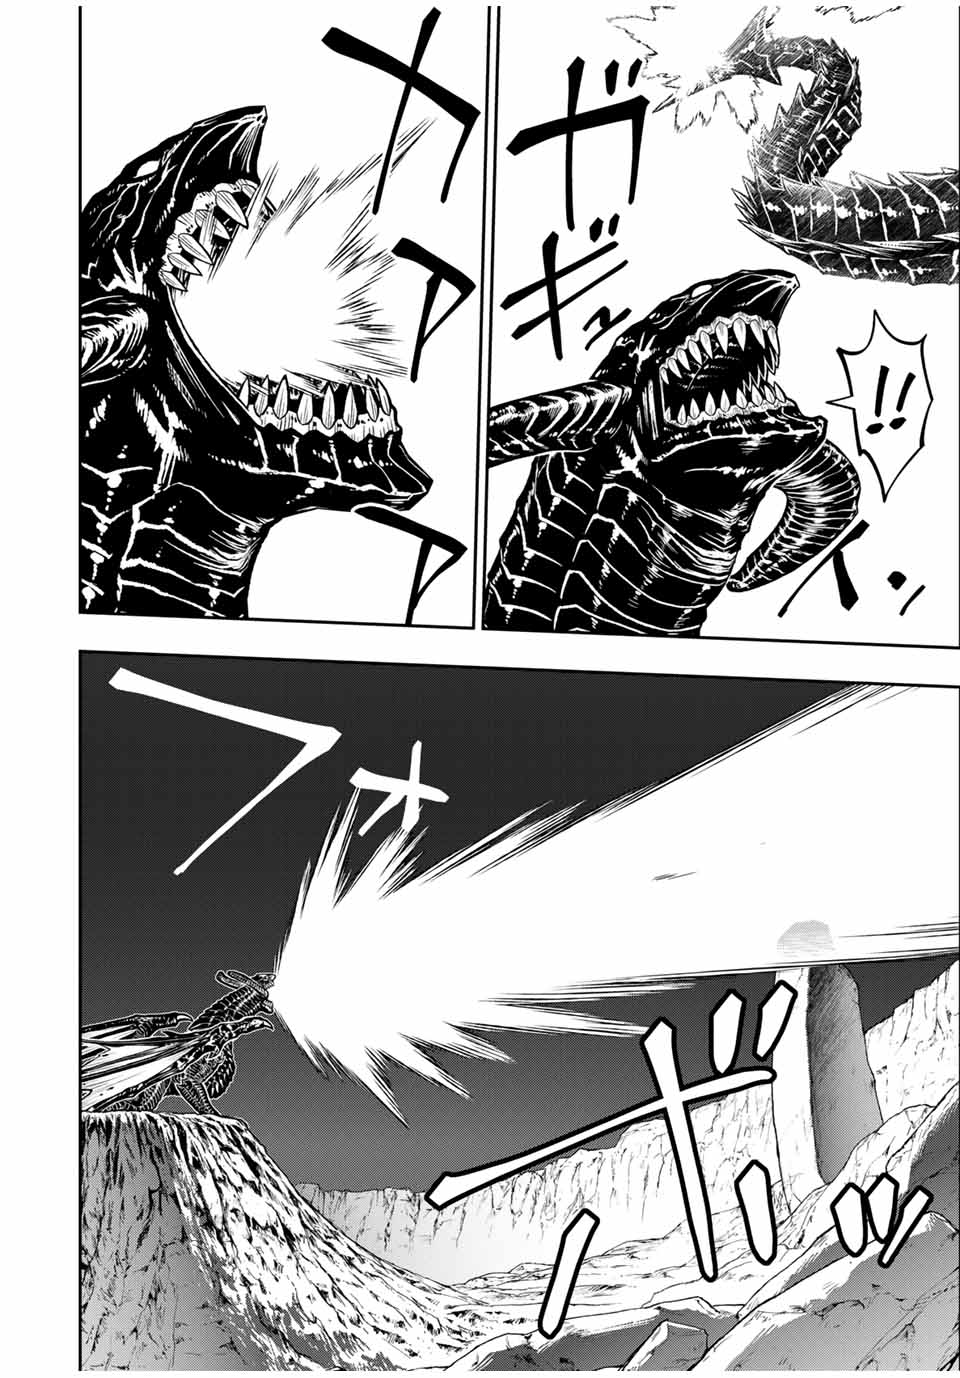 Nengan no Akuyaku Reijou (Last Boss) no Karada wo Teniiretazo!  - Chapter 21 - Page 8